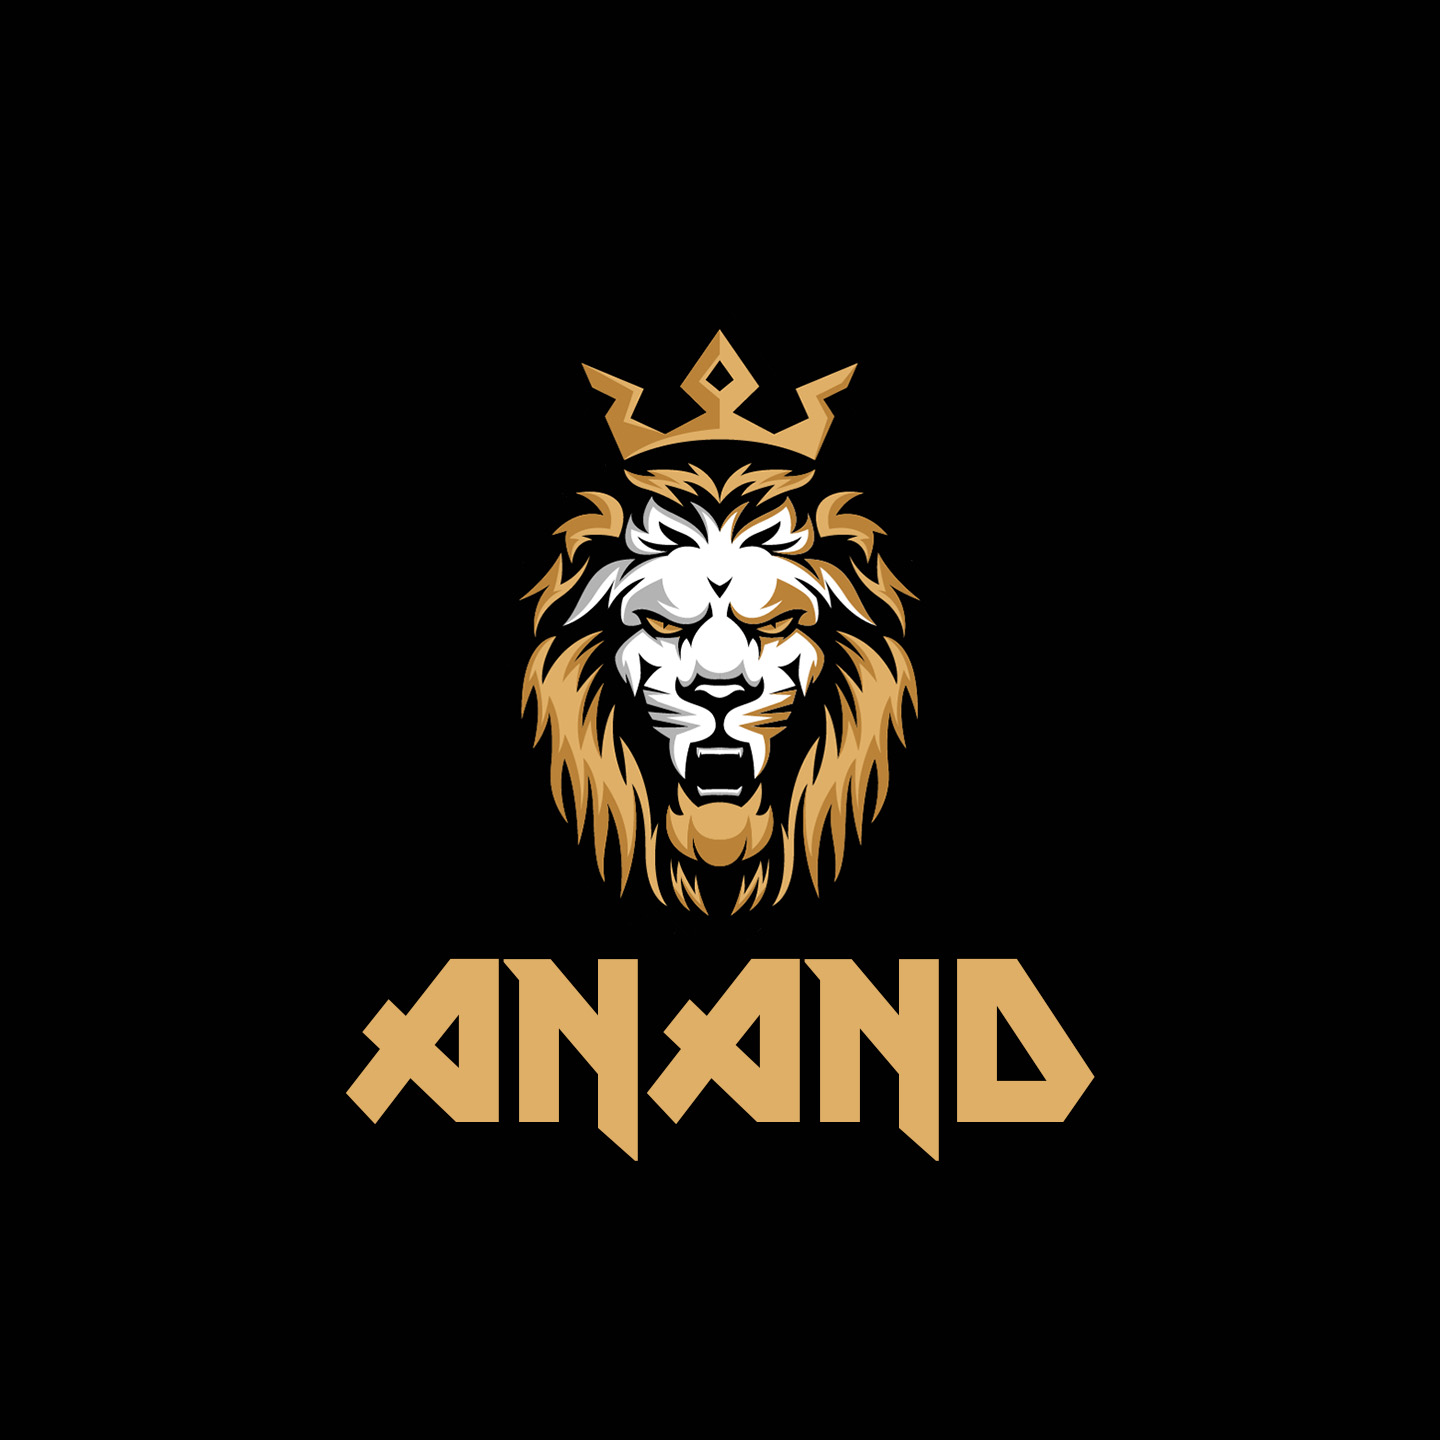 Ananda logo :: Behance